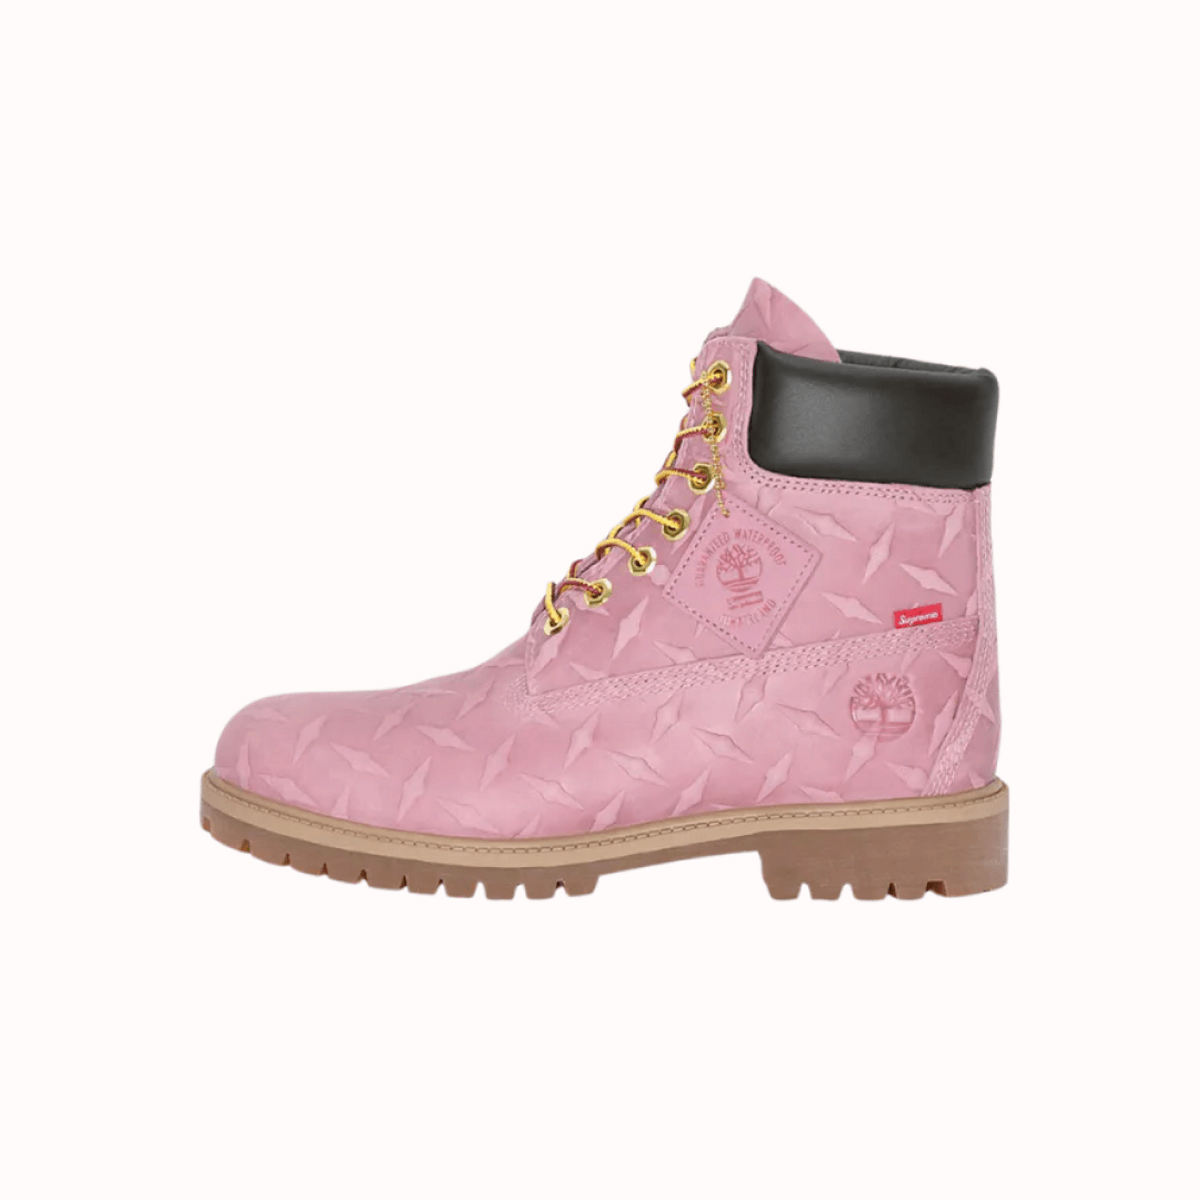 Supreme x Timberland 6” Premium Waterproof Boot Pink